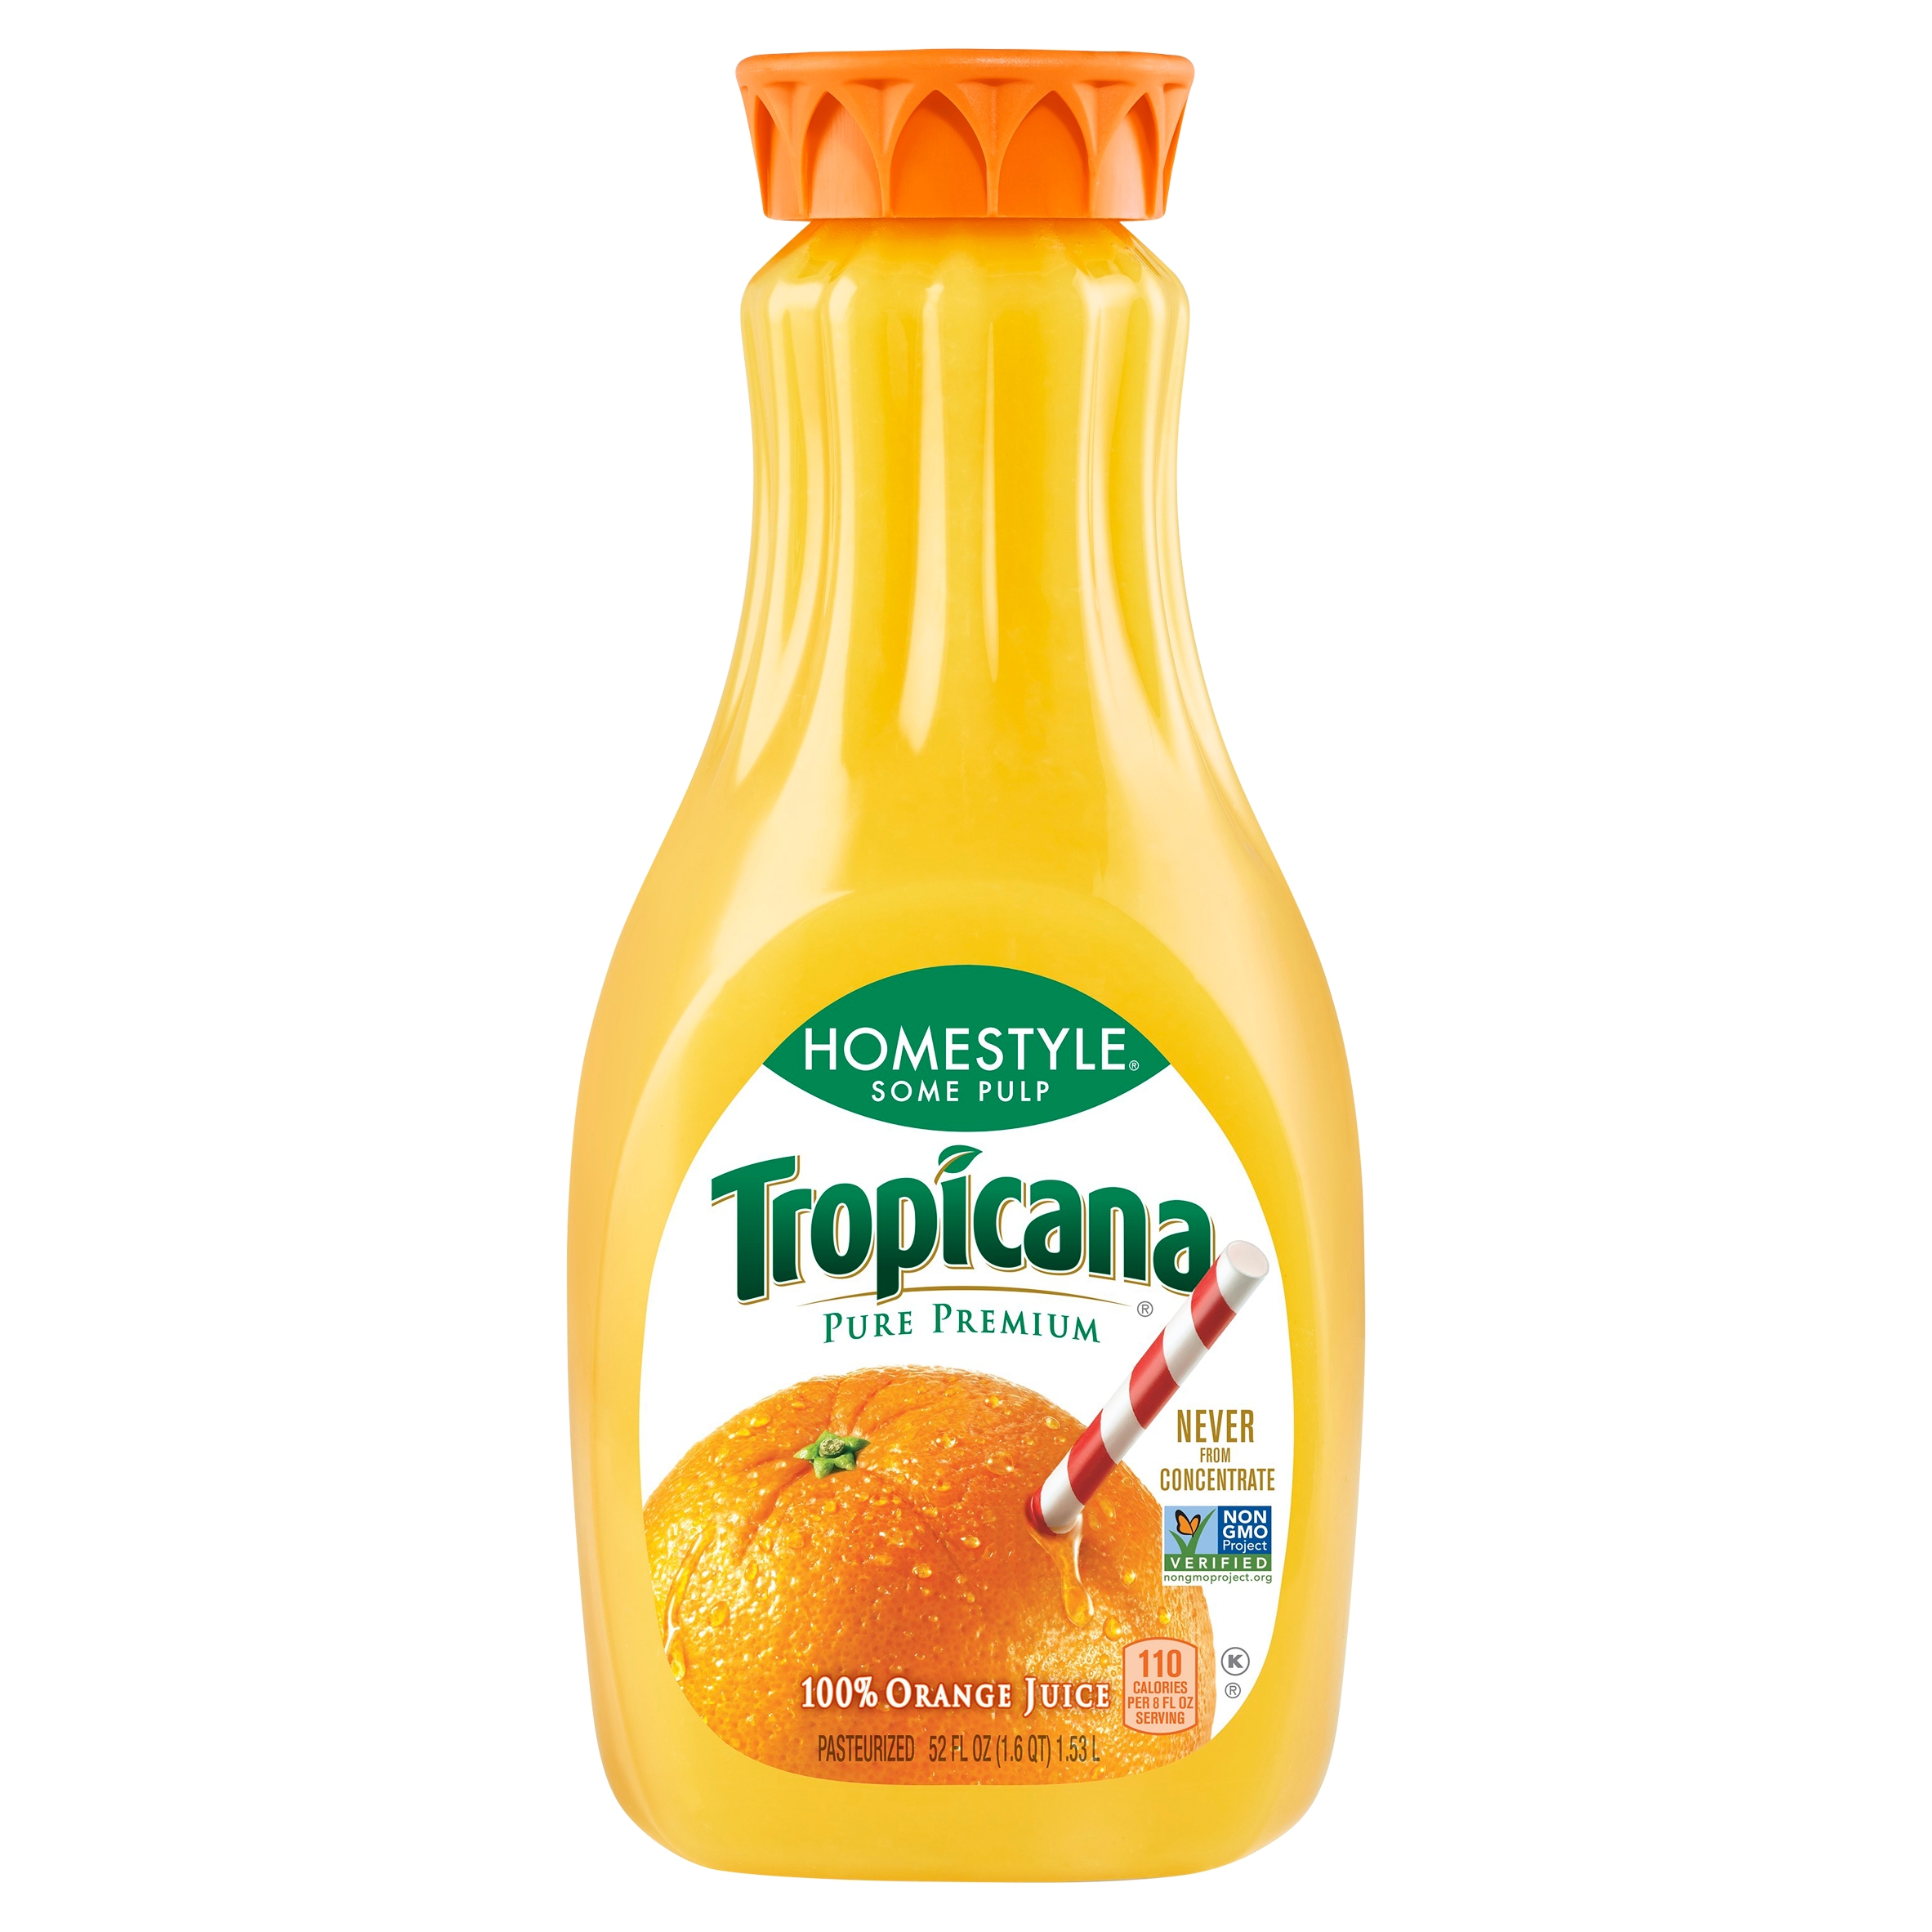 Tropicana Pure Premium, Homestyle Some Pulp 100% Orange Juice, 52 oz Bottle - image 1 of 9